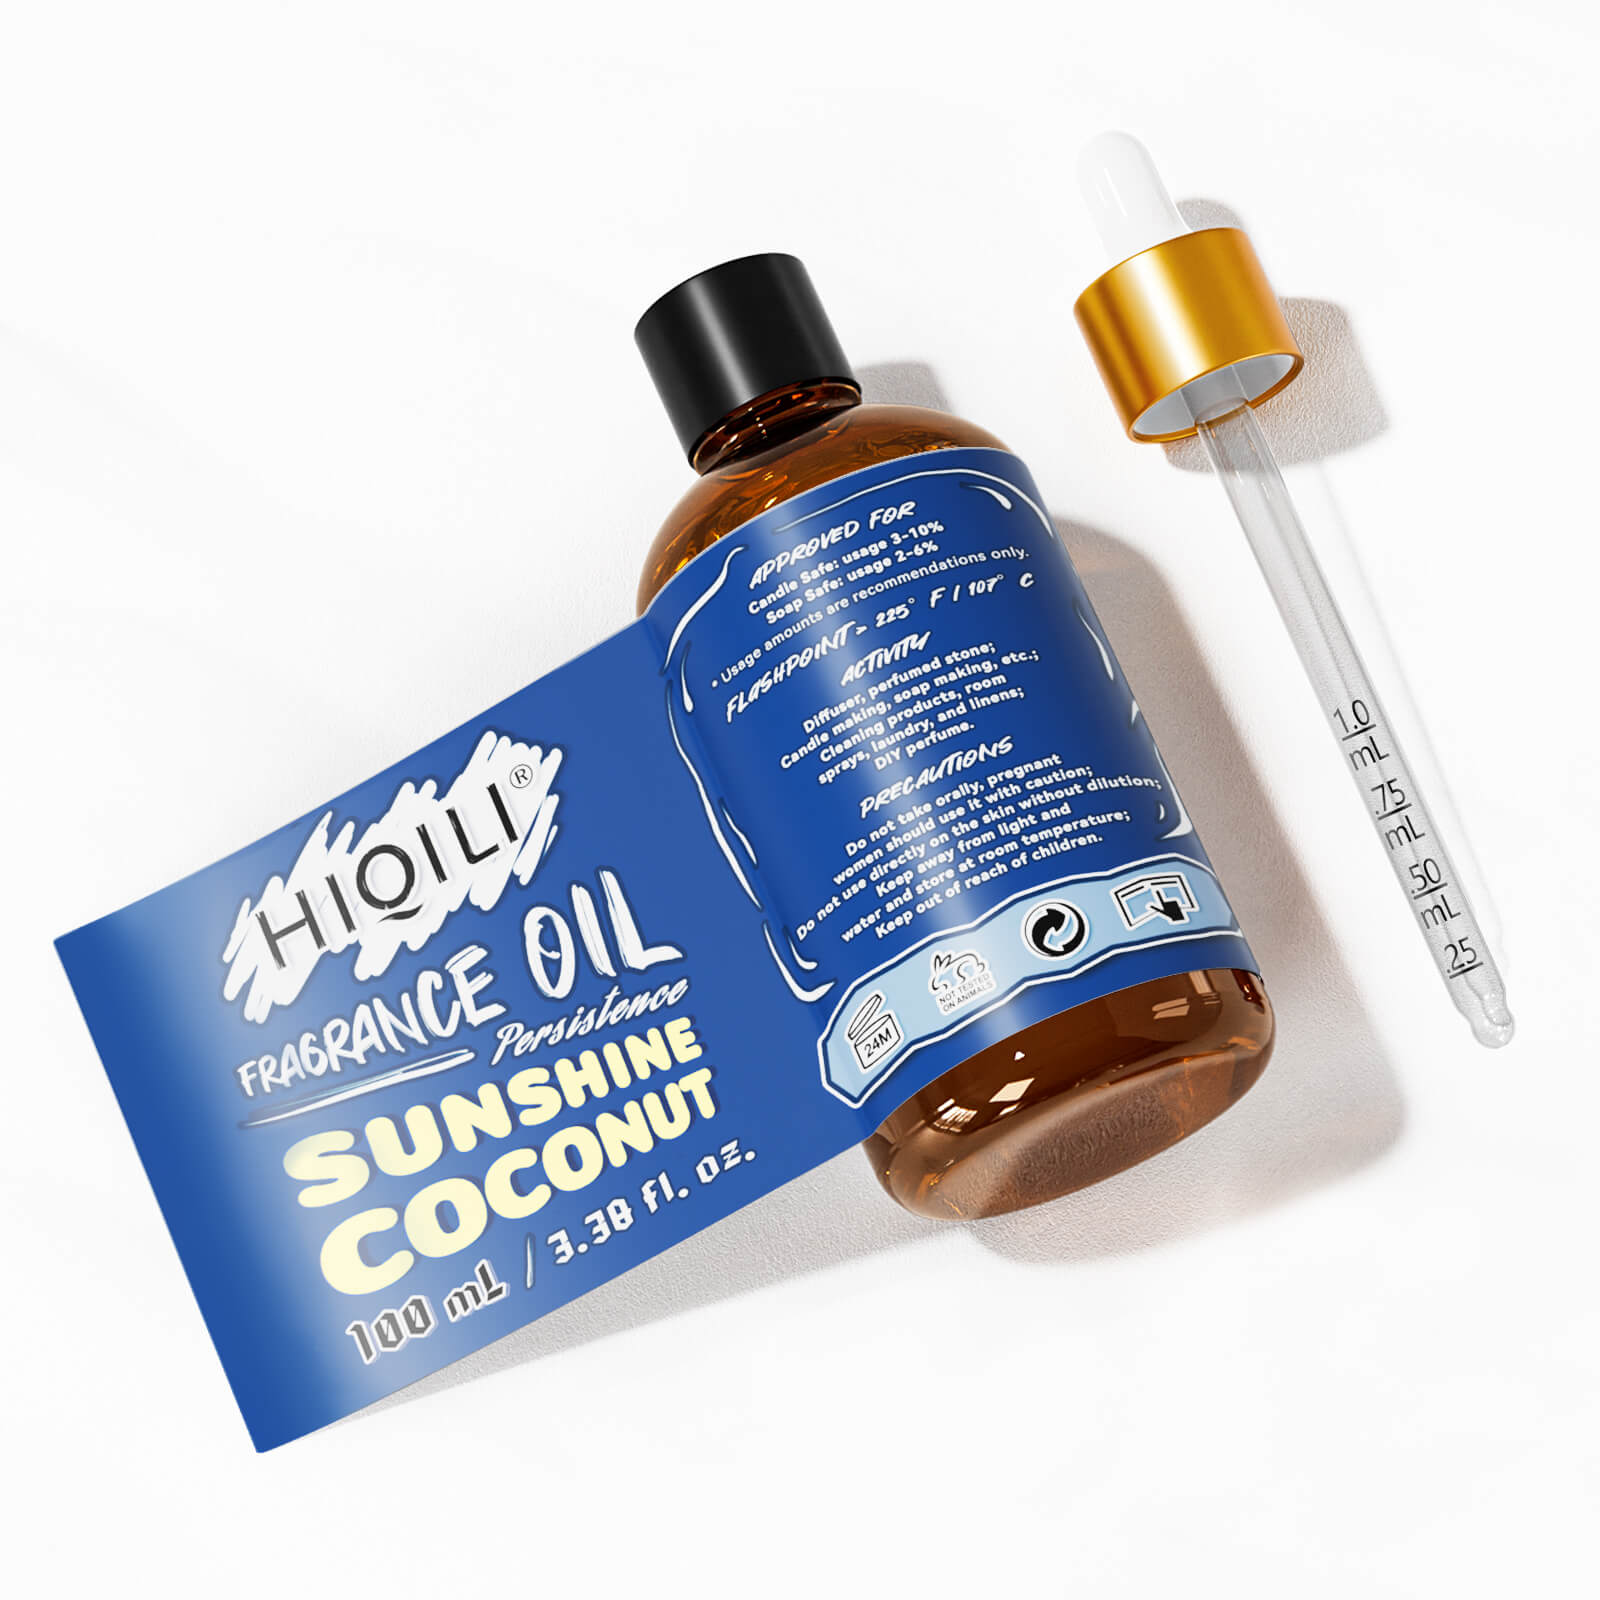 Sunshine Coconut Fragrance Oil